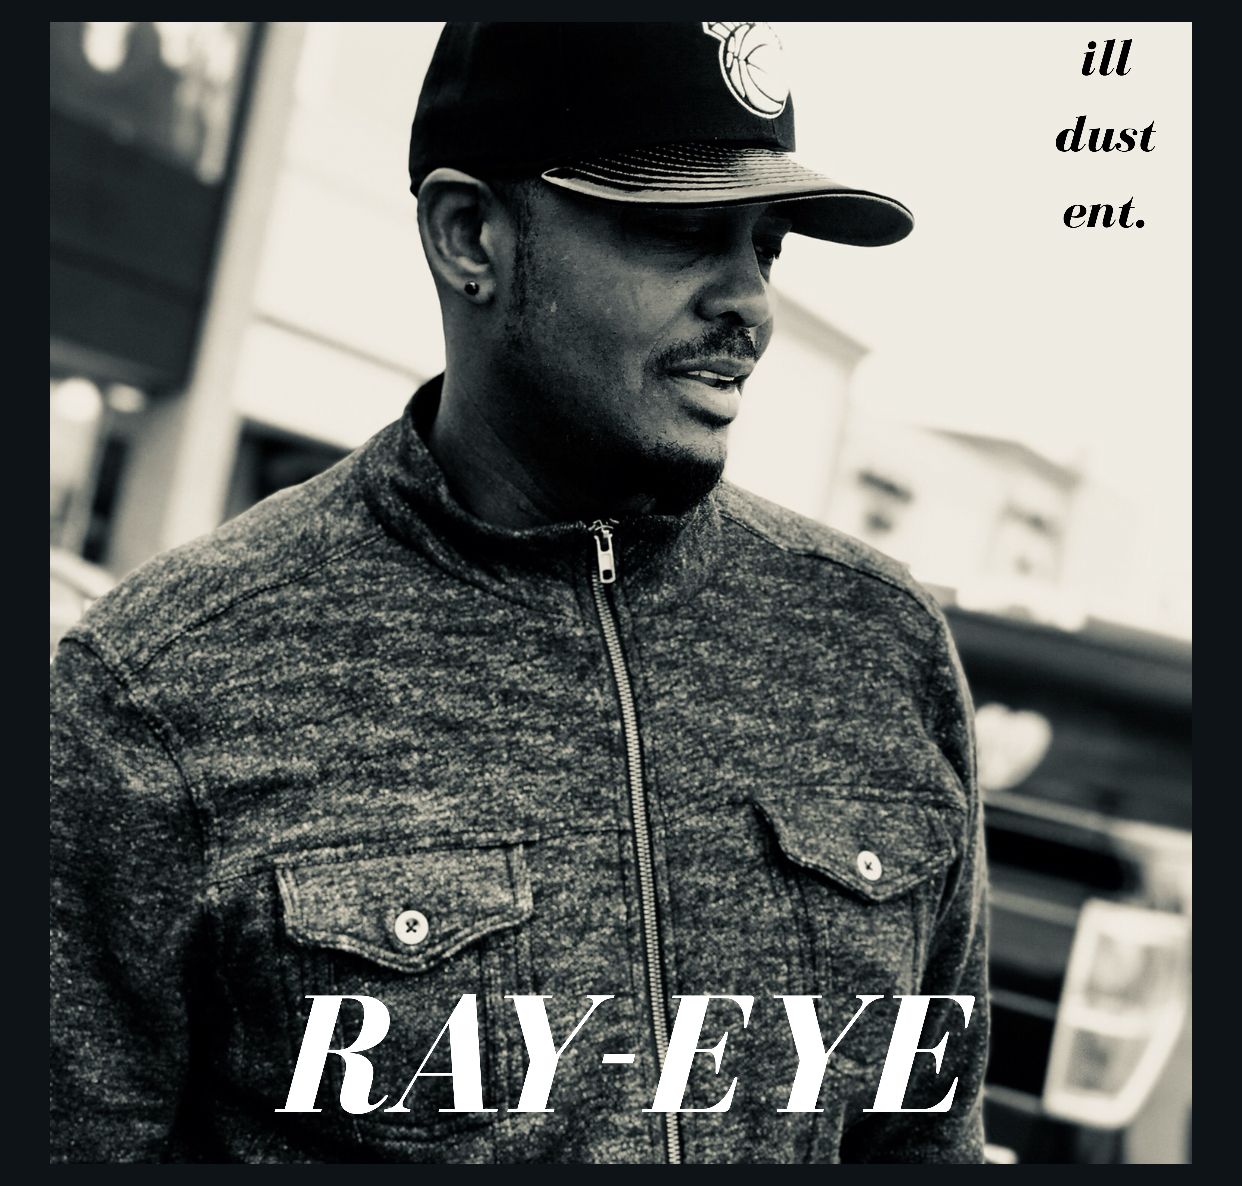 Ray Eye